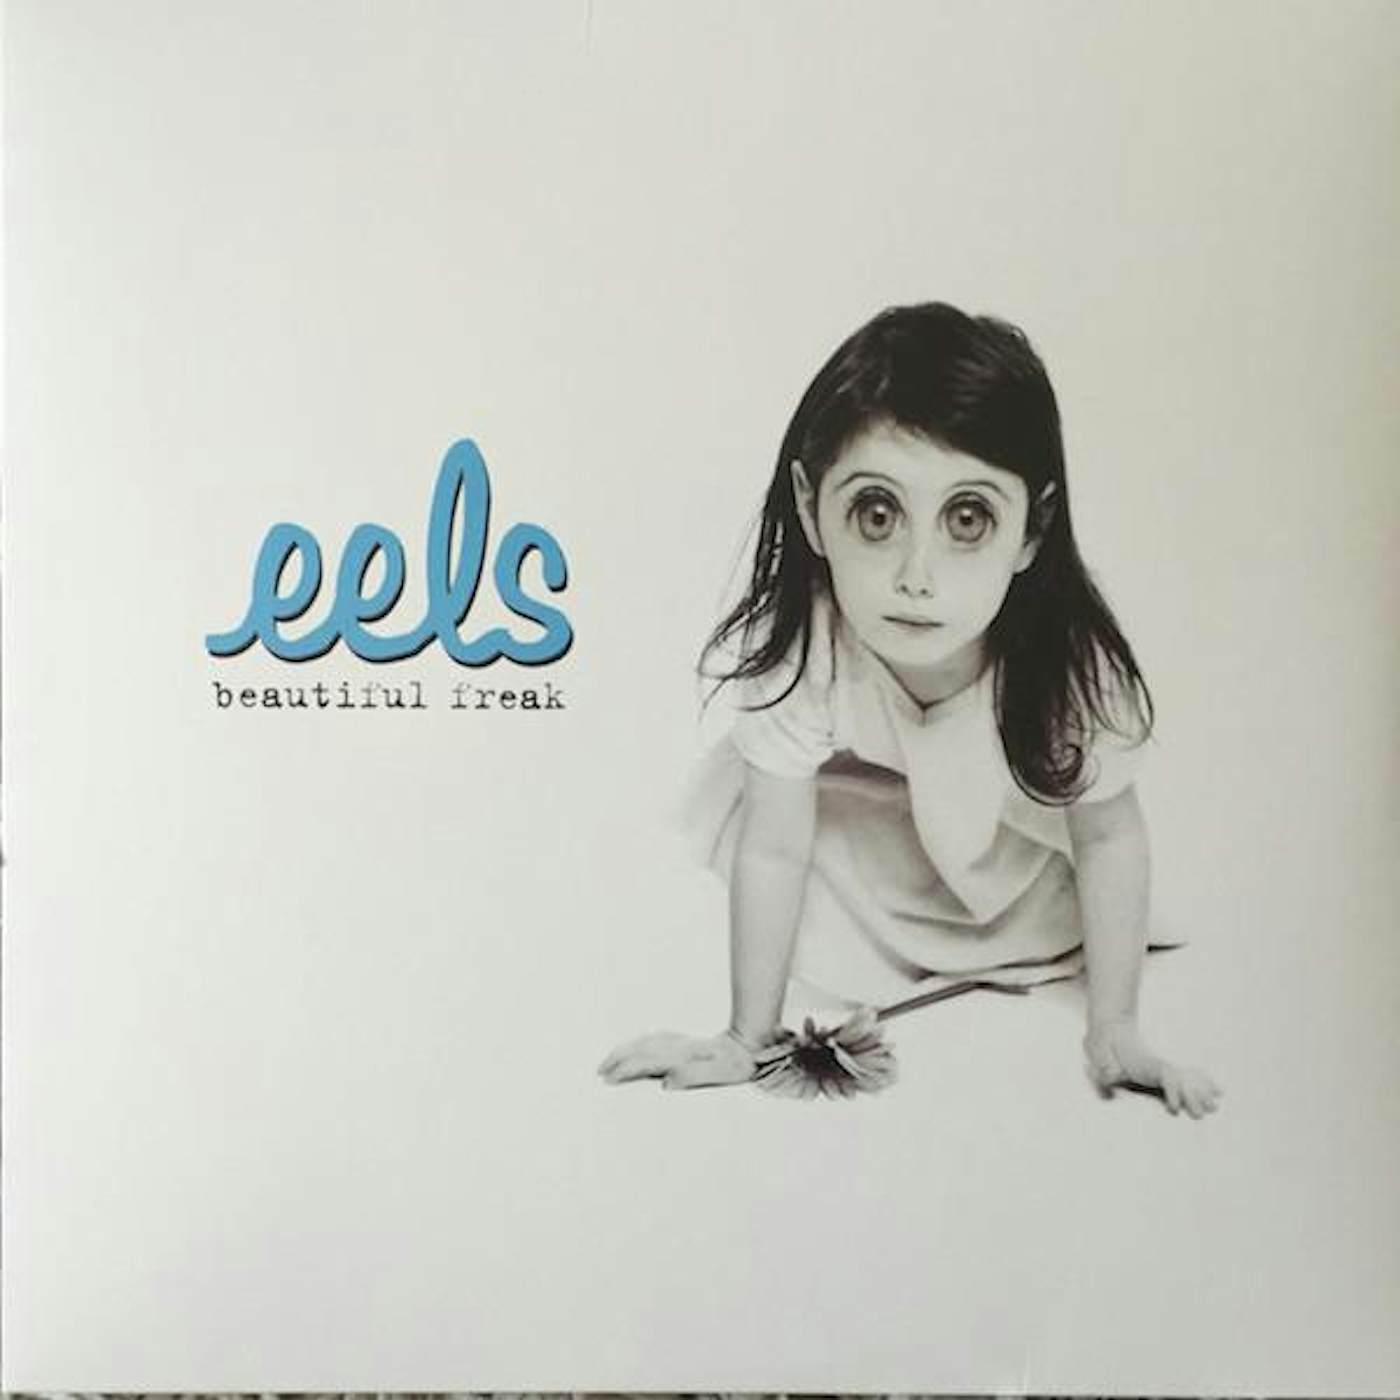 Eels BEAUTIFUL FREAK (180G) Vinyl Record